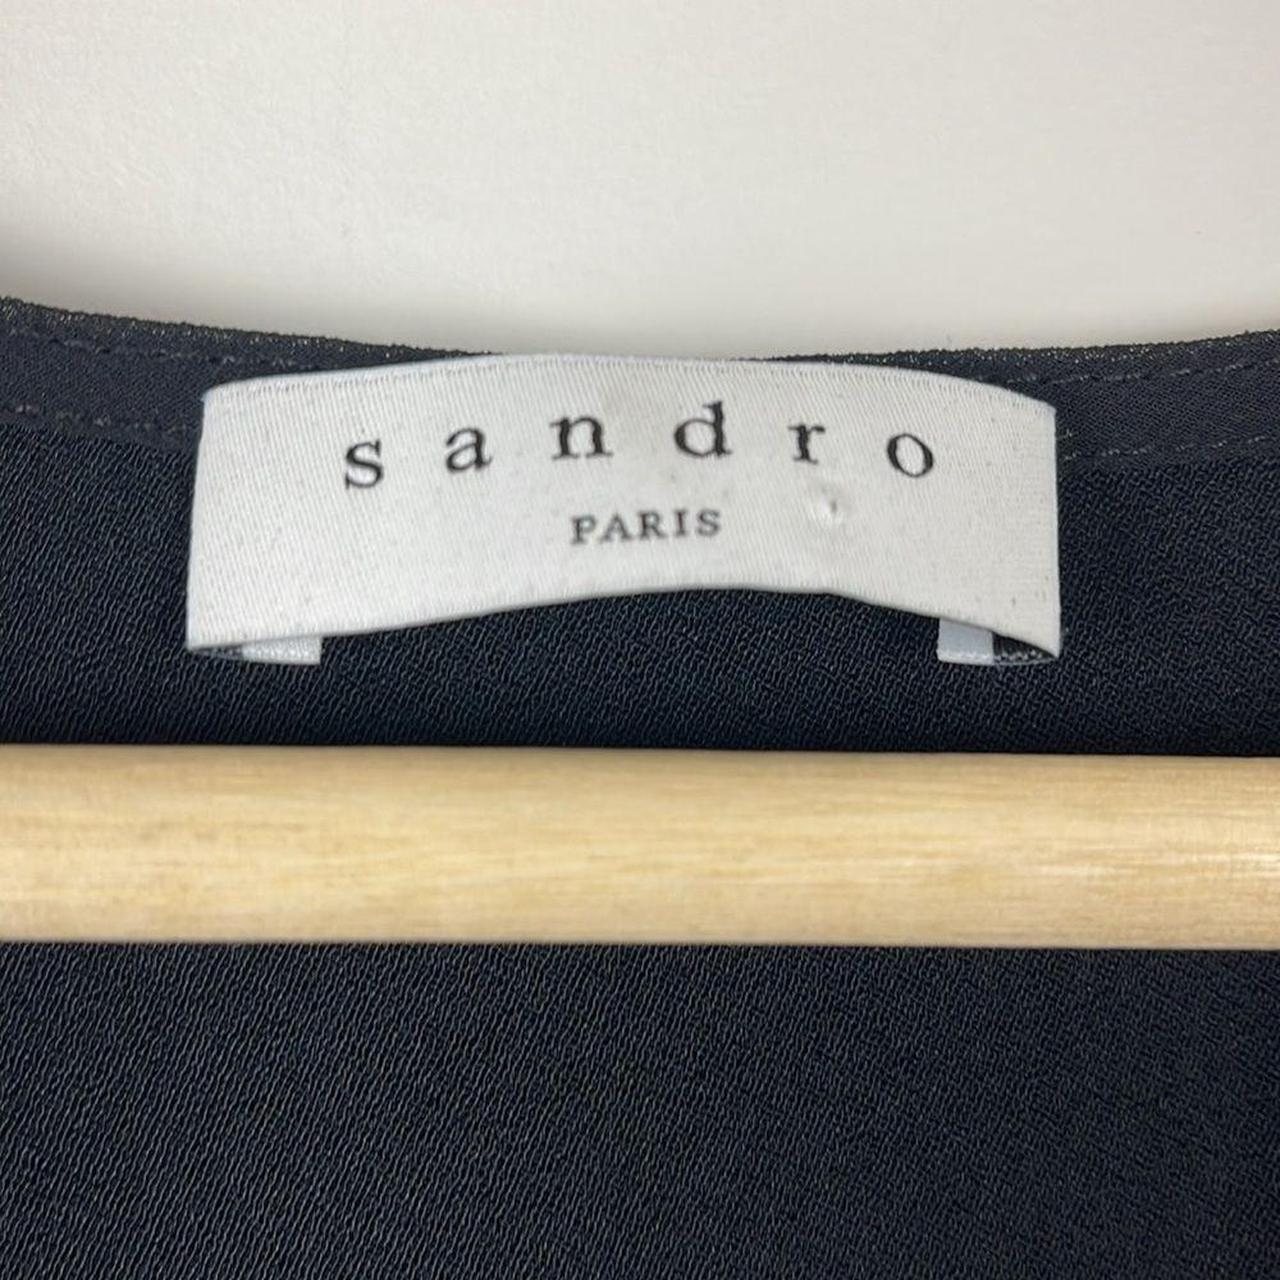 Product Image 4 - Sandro Paris Box Sabra Noir